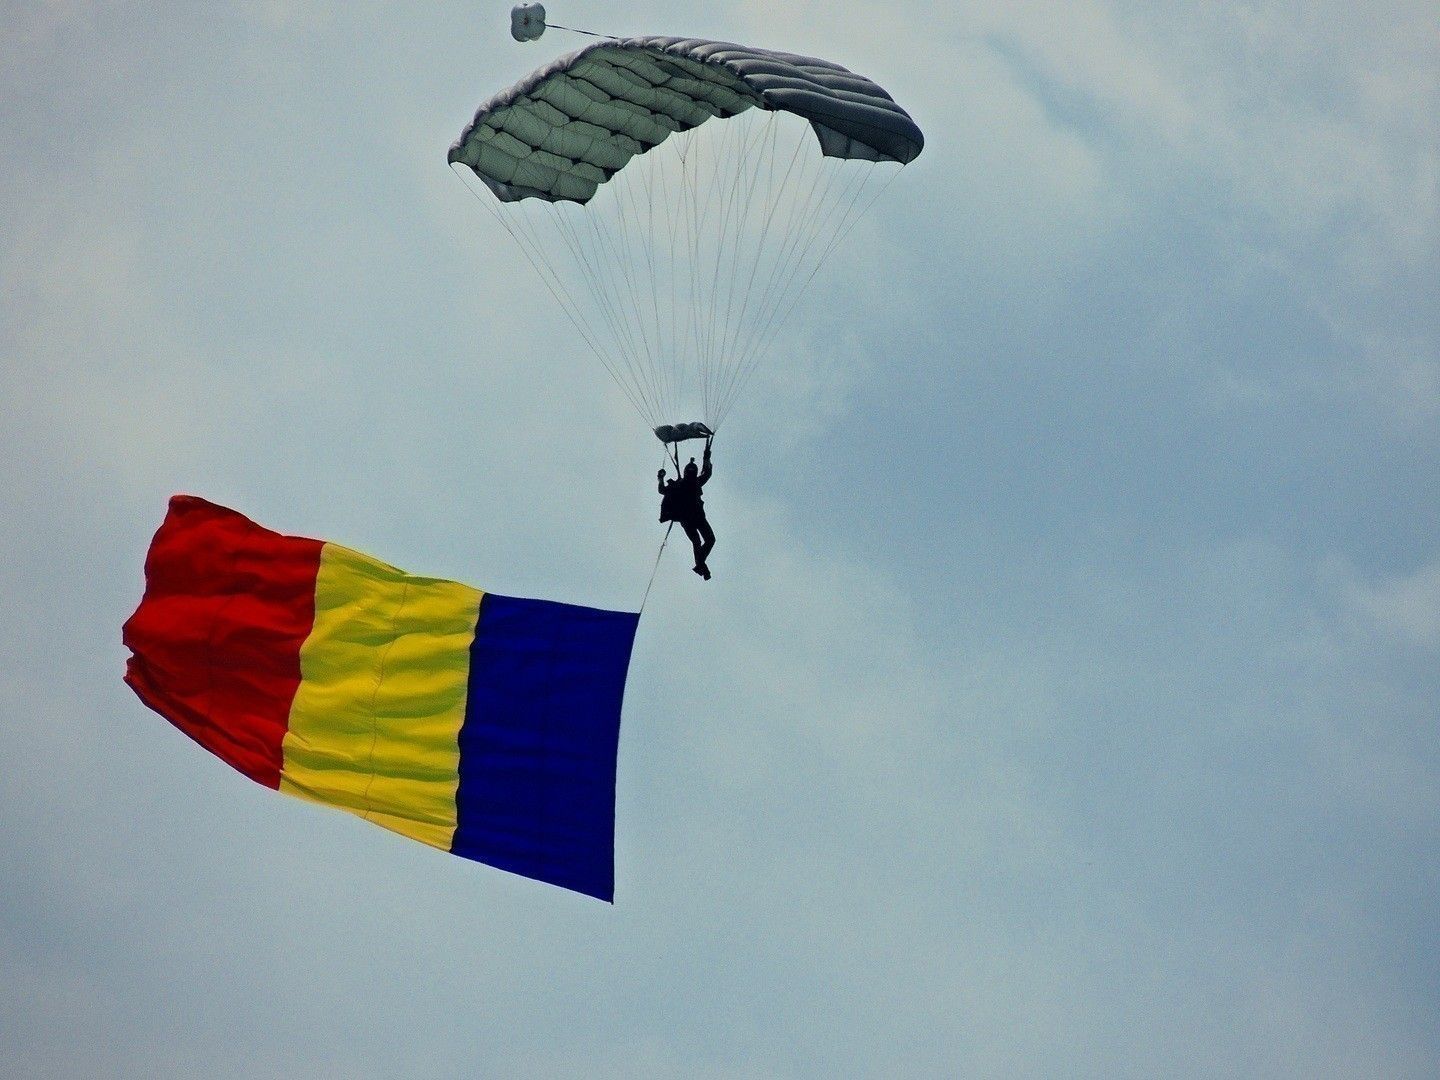 parachute-jumper-1747840